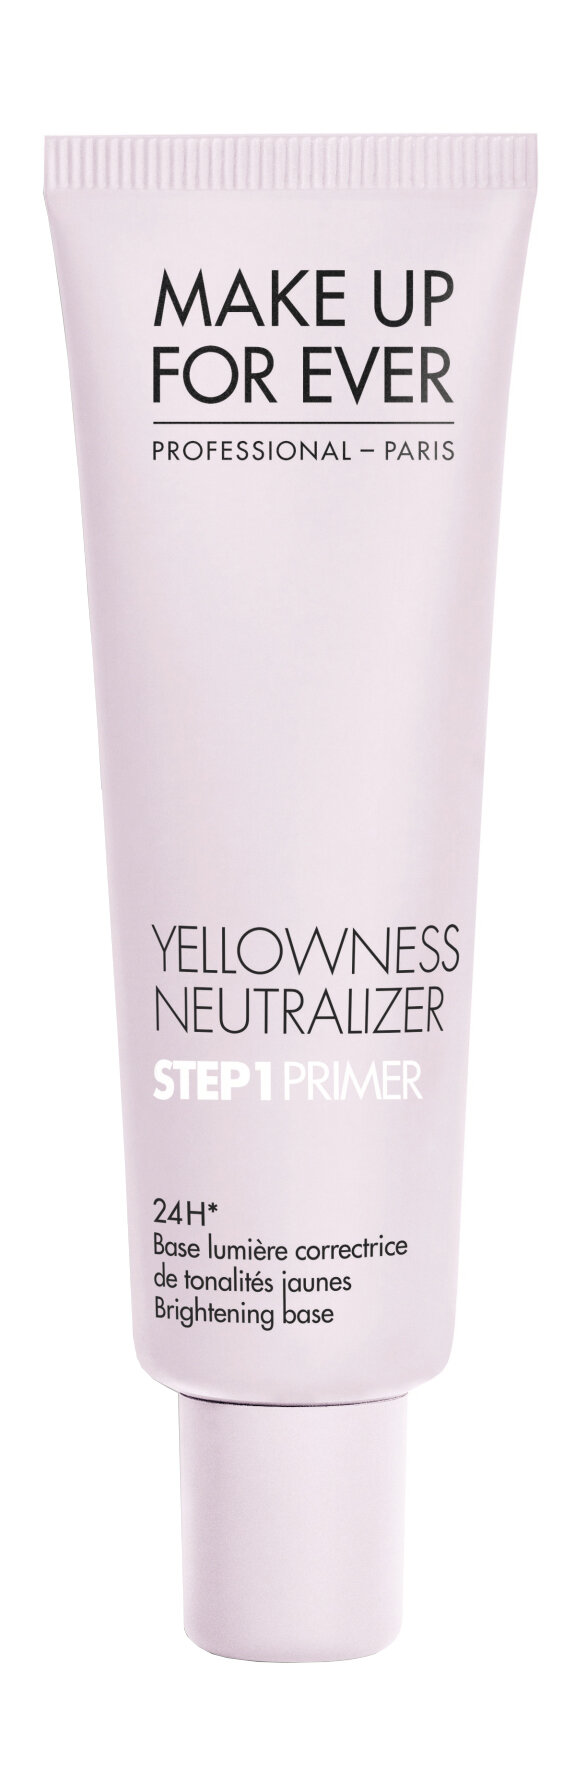 База под макияж нейтрализующая желтизну Make Up For Ever Yellown Neutra Step 1 Primer 24h Brightening Base 30 мл .